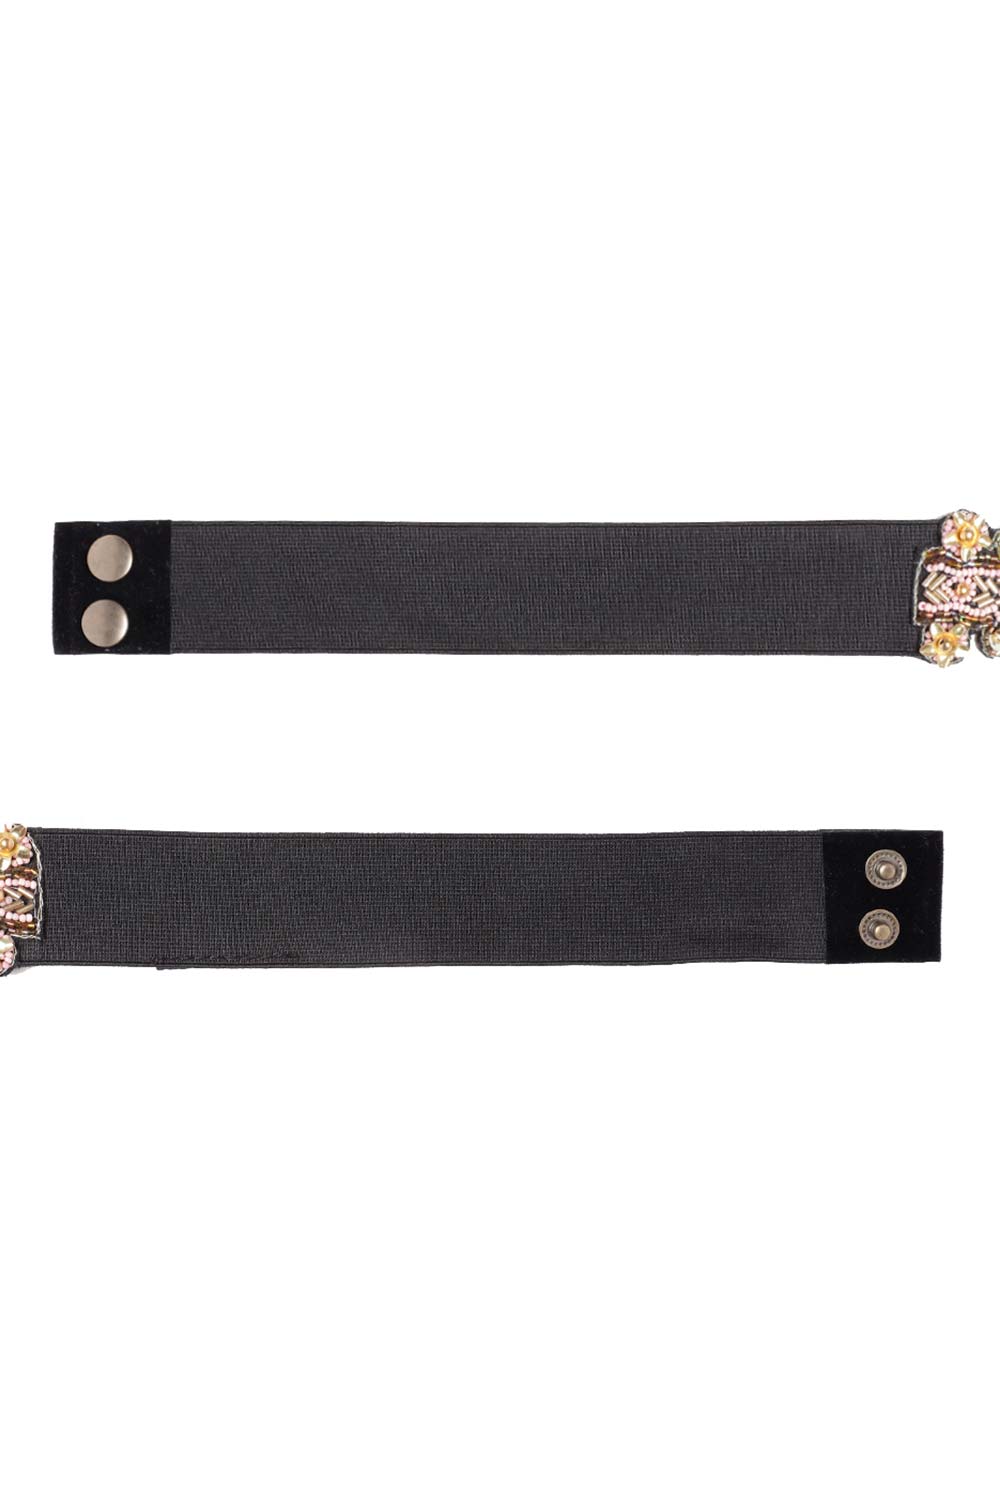 Buy Ogee Bead Work Saree Waist Belt in Pink & Gold Online